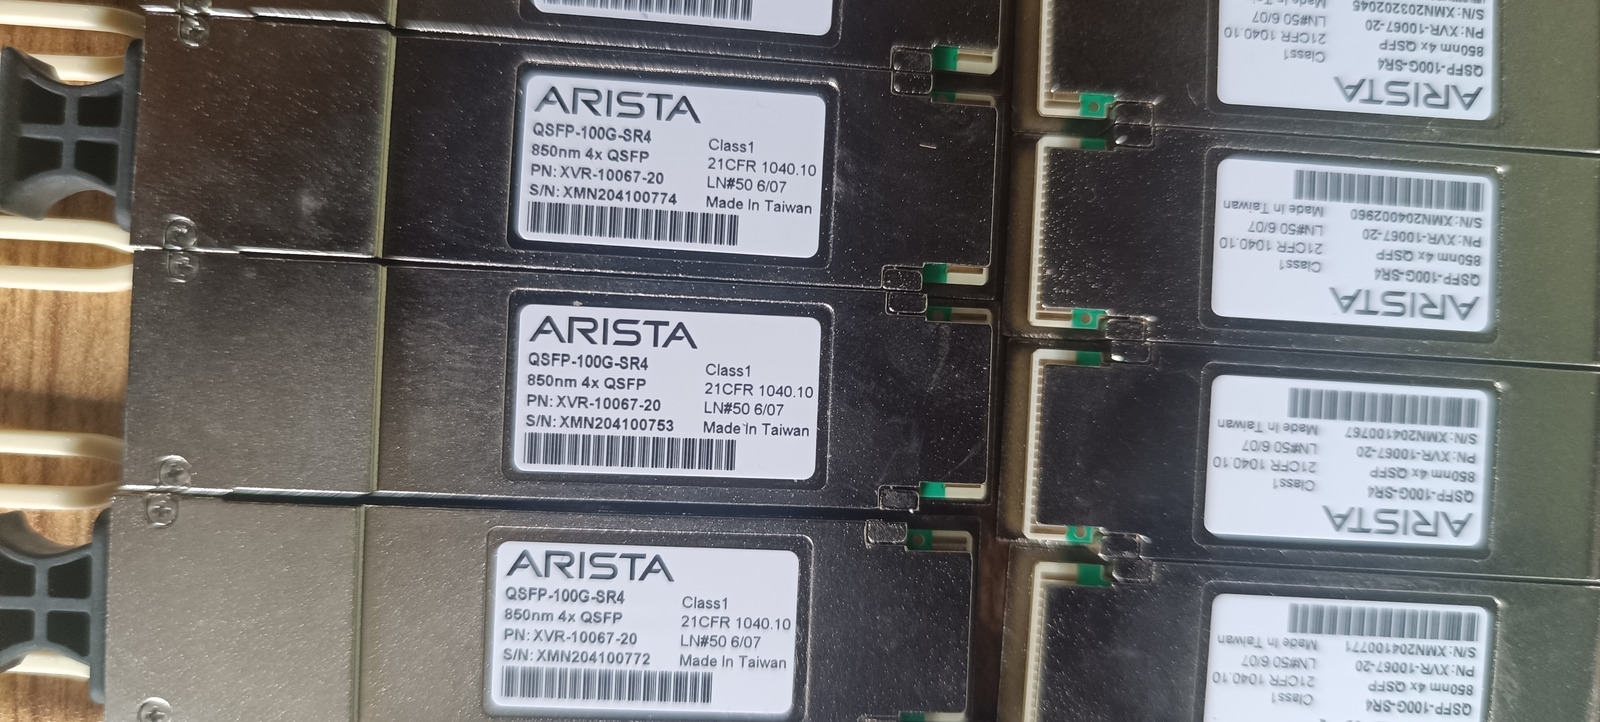 LOT OF 15X NEW ARISTA QSFP-100G-SR4 Class1 850nm 4x QSFP XVR-10067-20